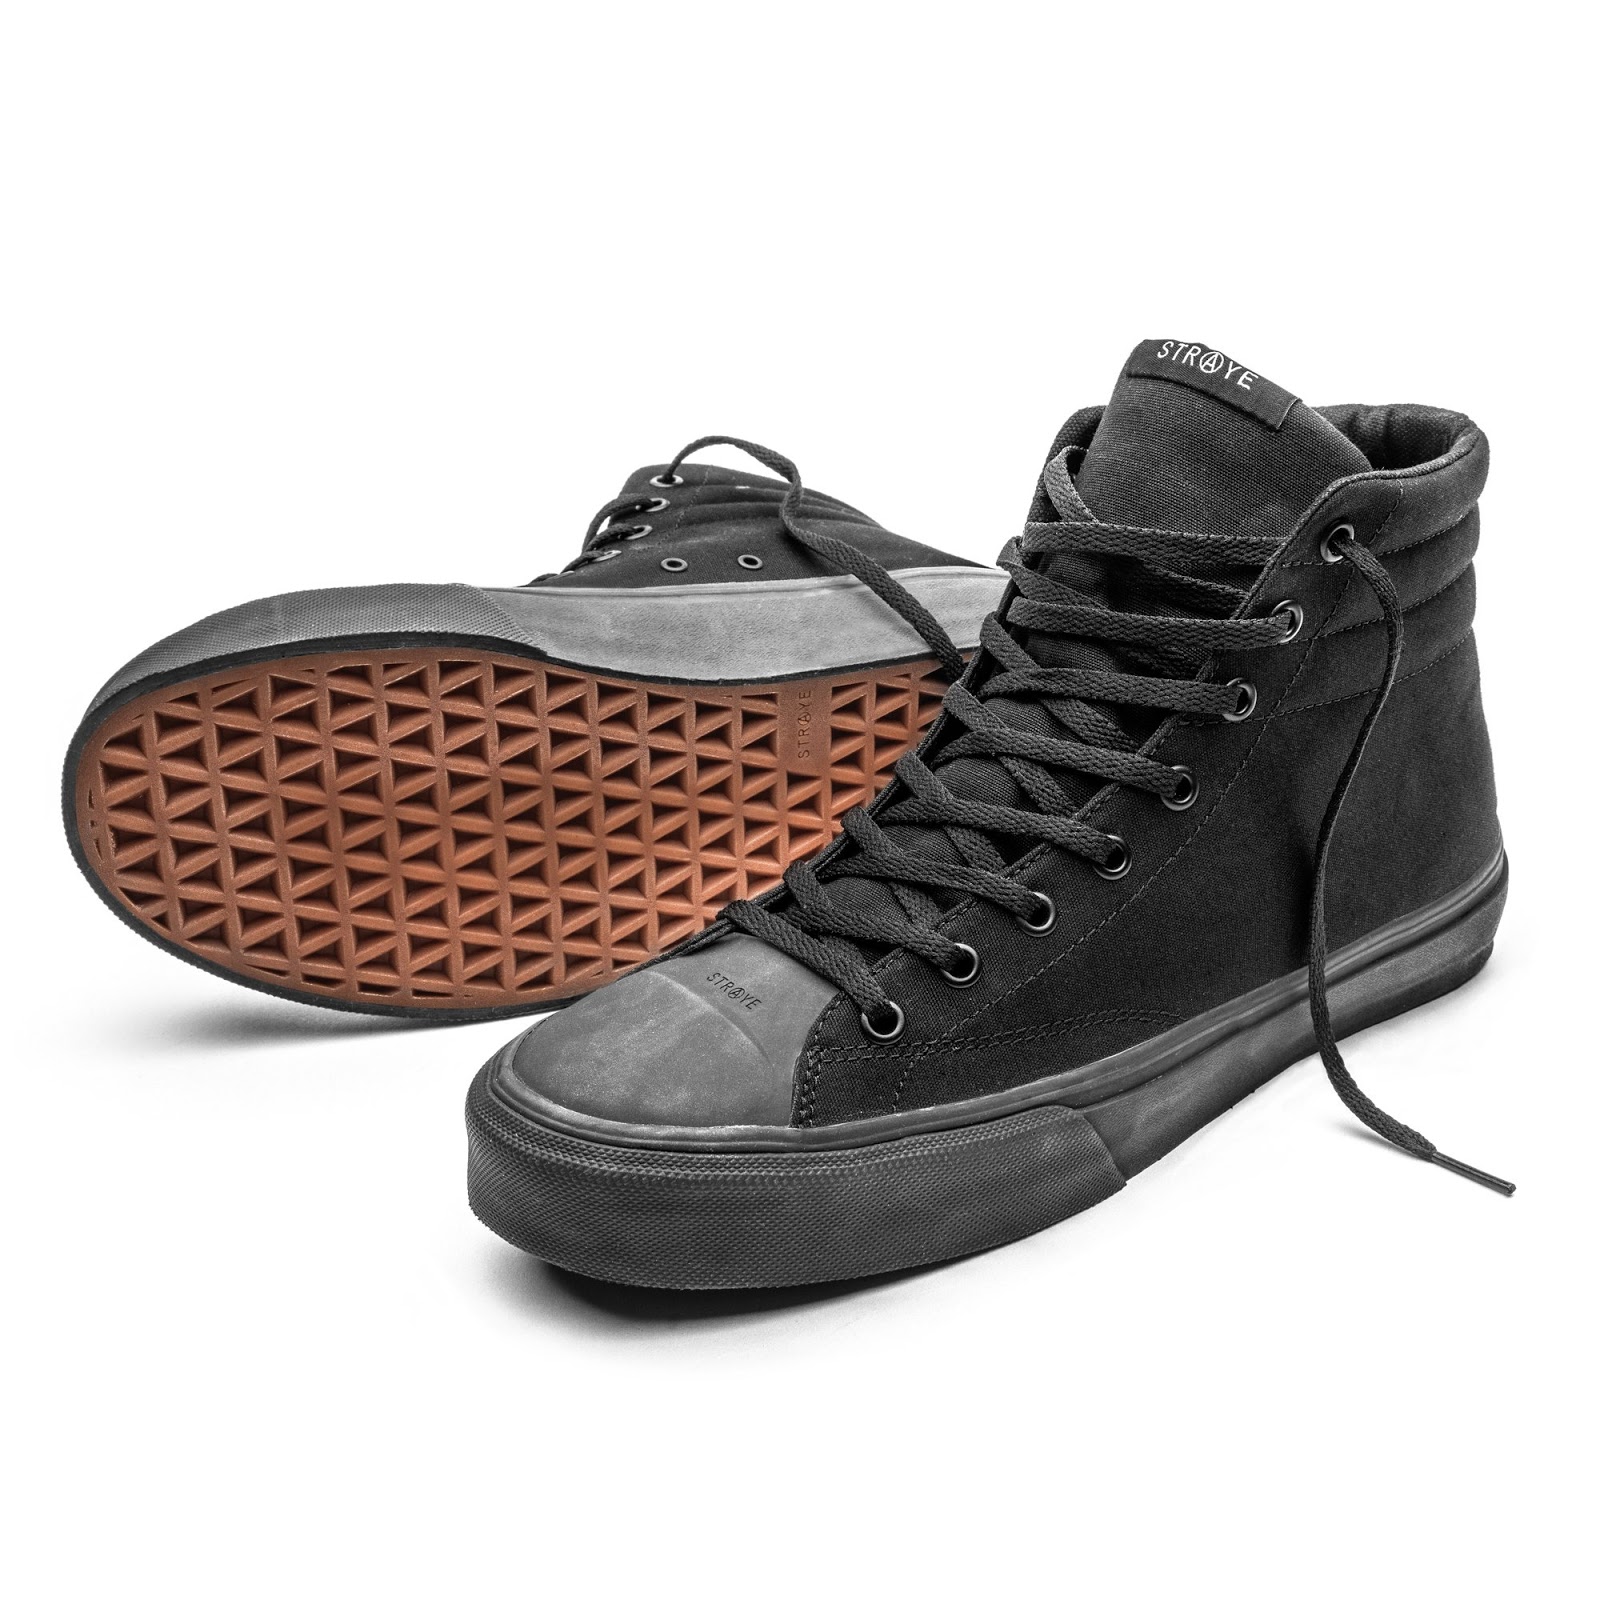 Straye footwear vegan canvas skate shoe options